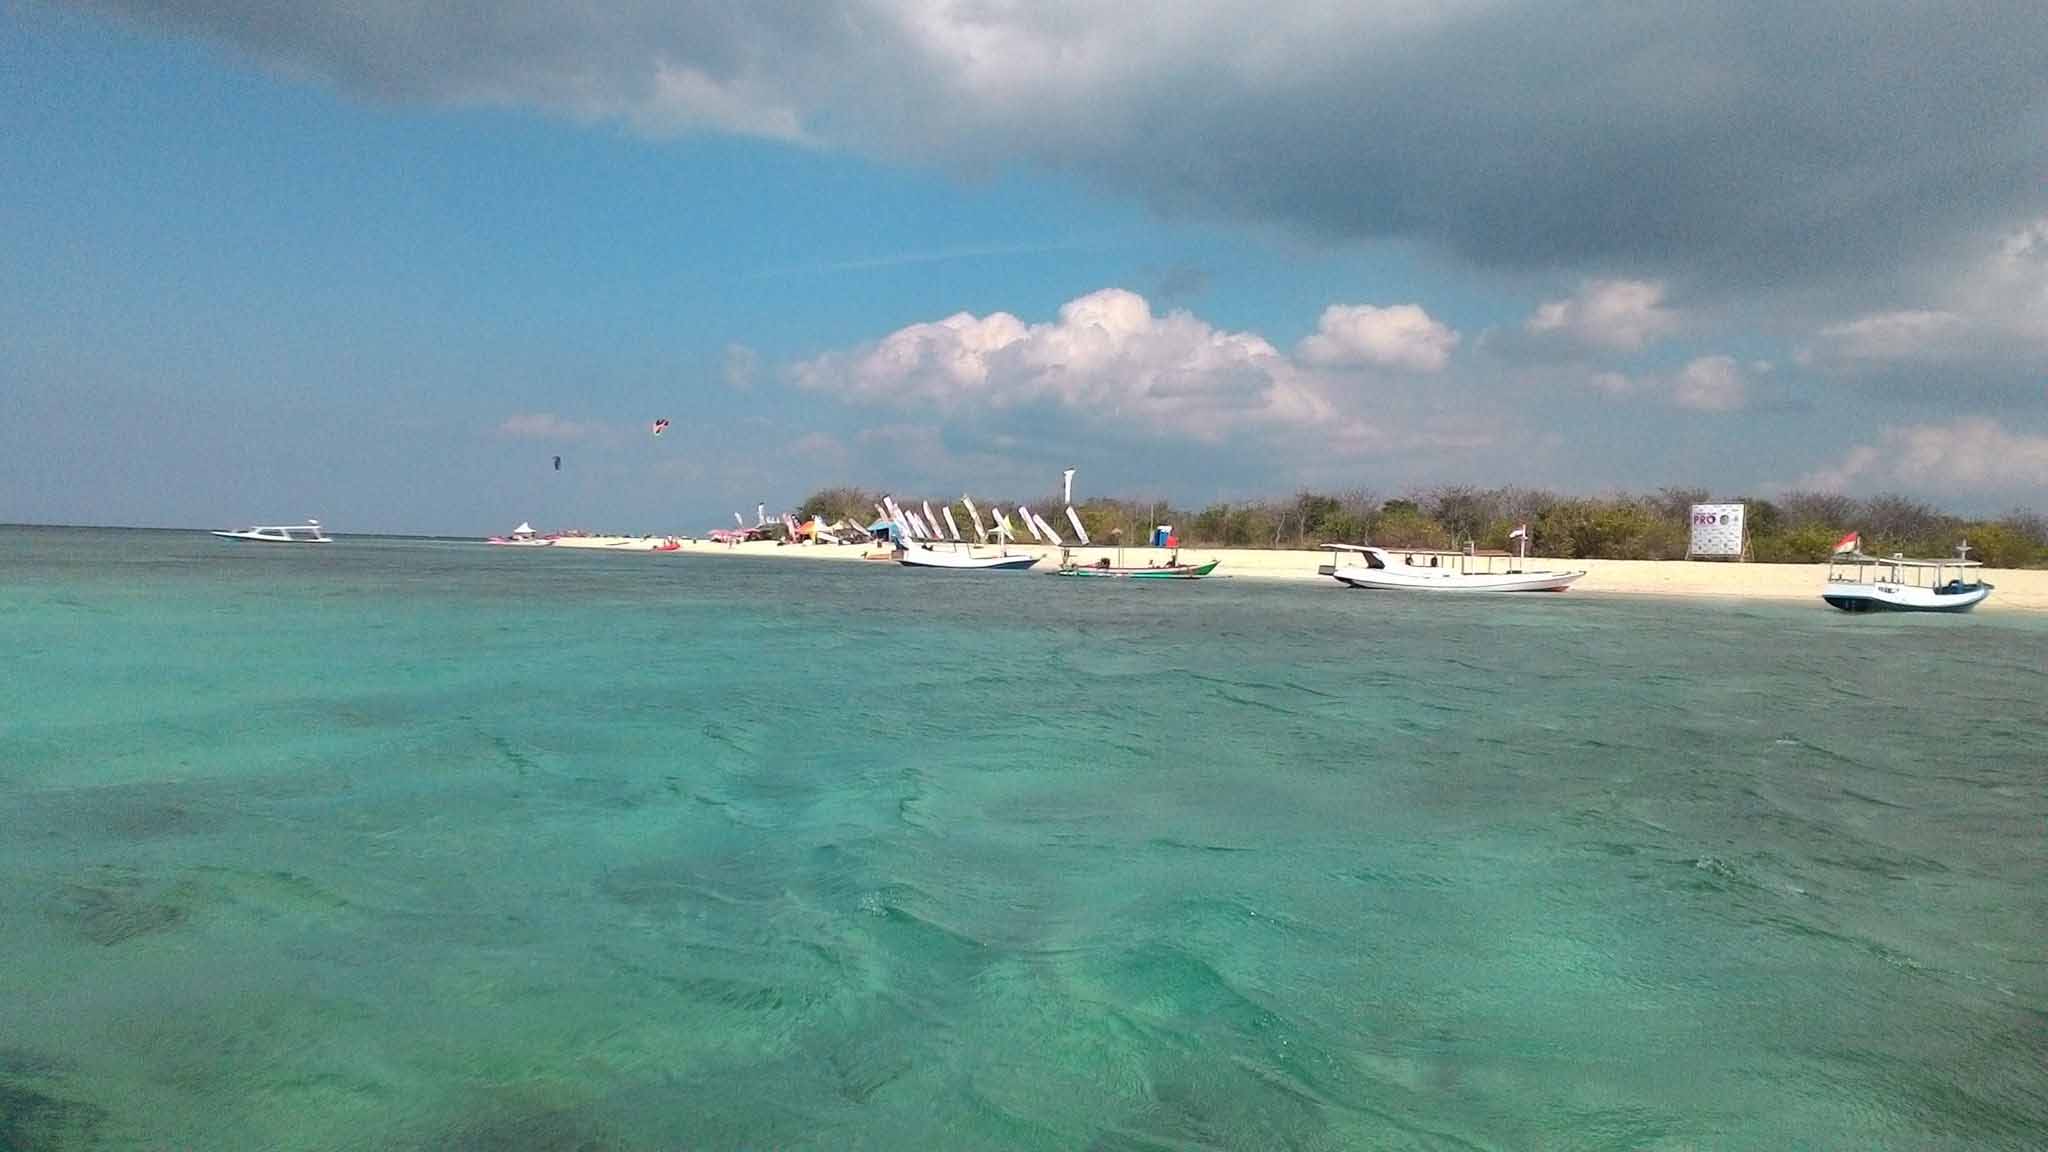 Kitesurfing at Tabuhan island